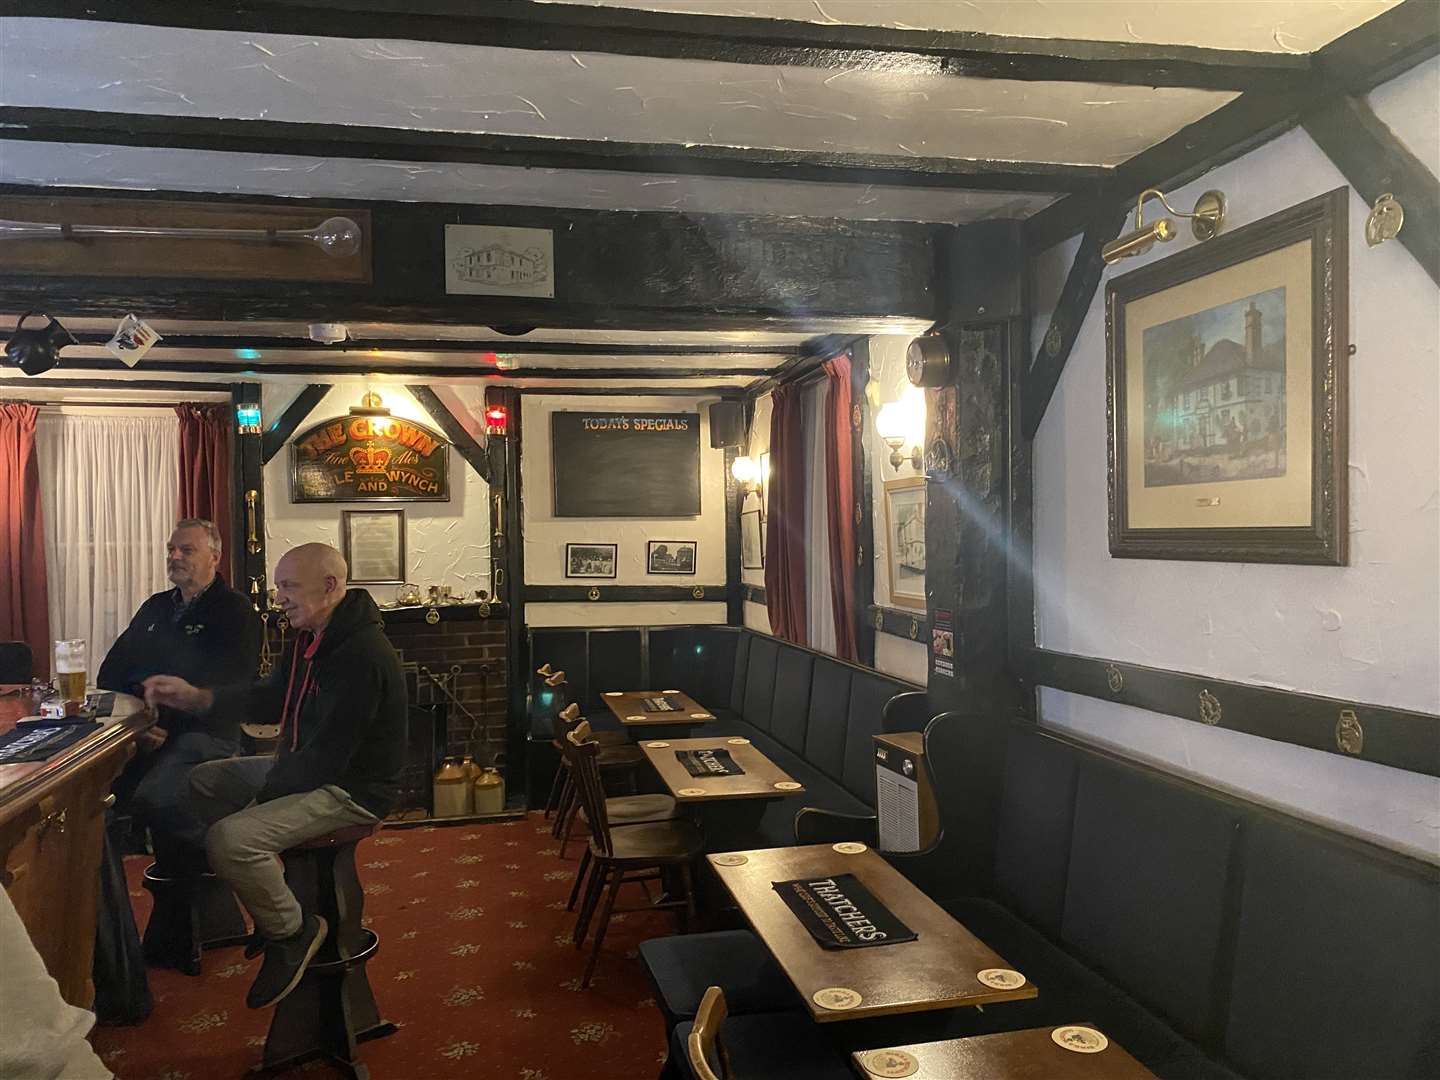 Inside The Crown pub